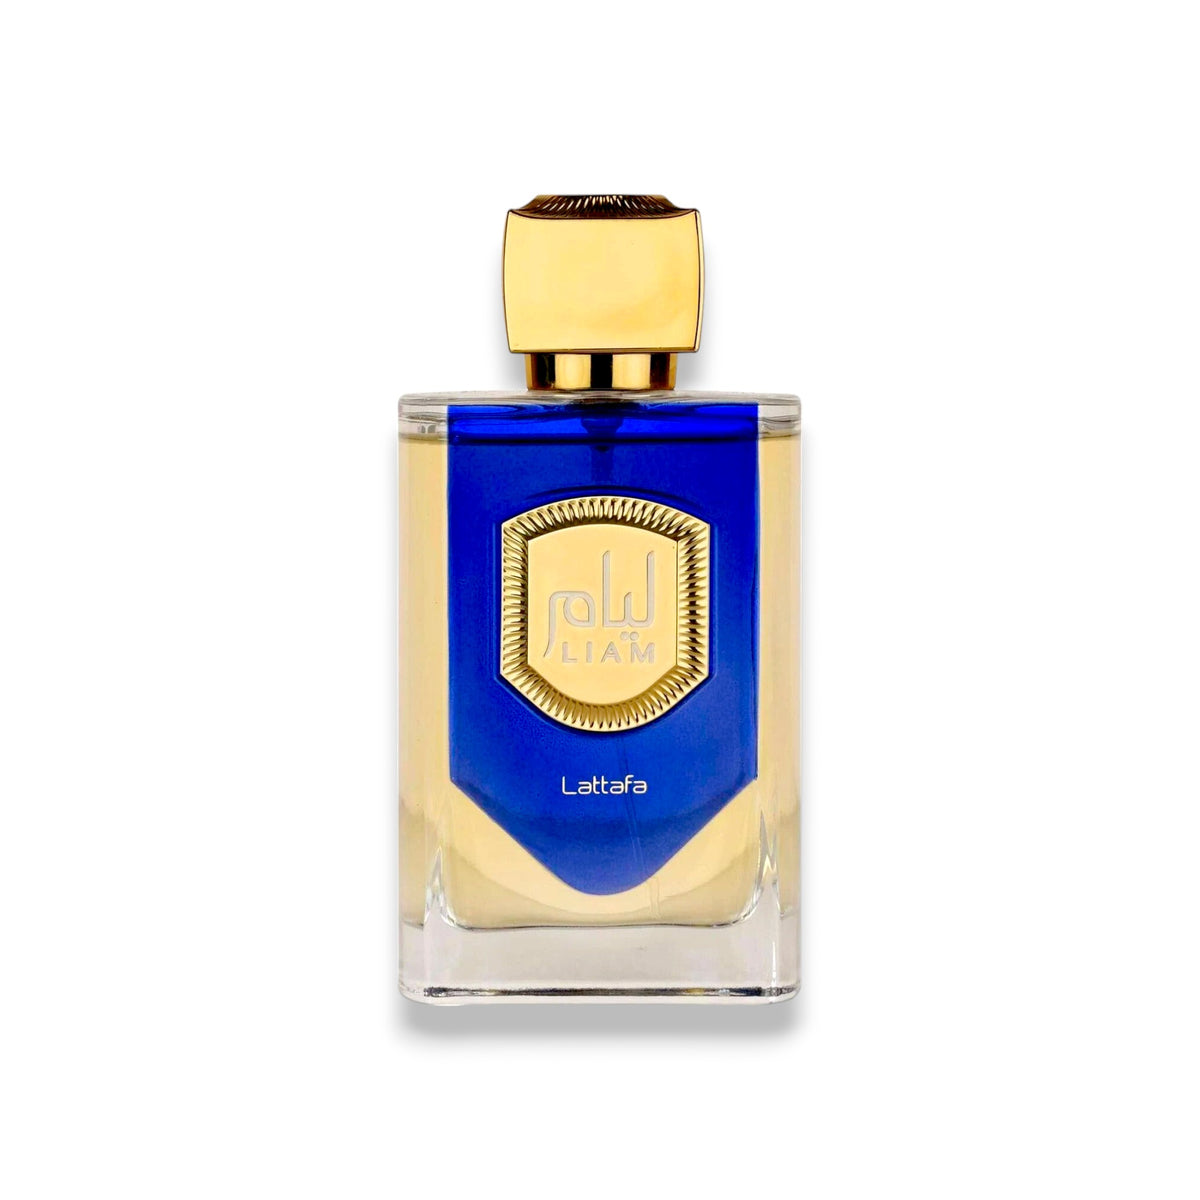 Liam Blue Shine by Lattafa Eau de Parfum for Men 3.4 oz